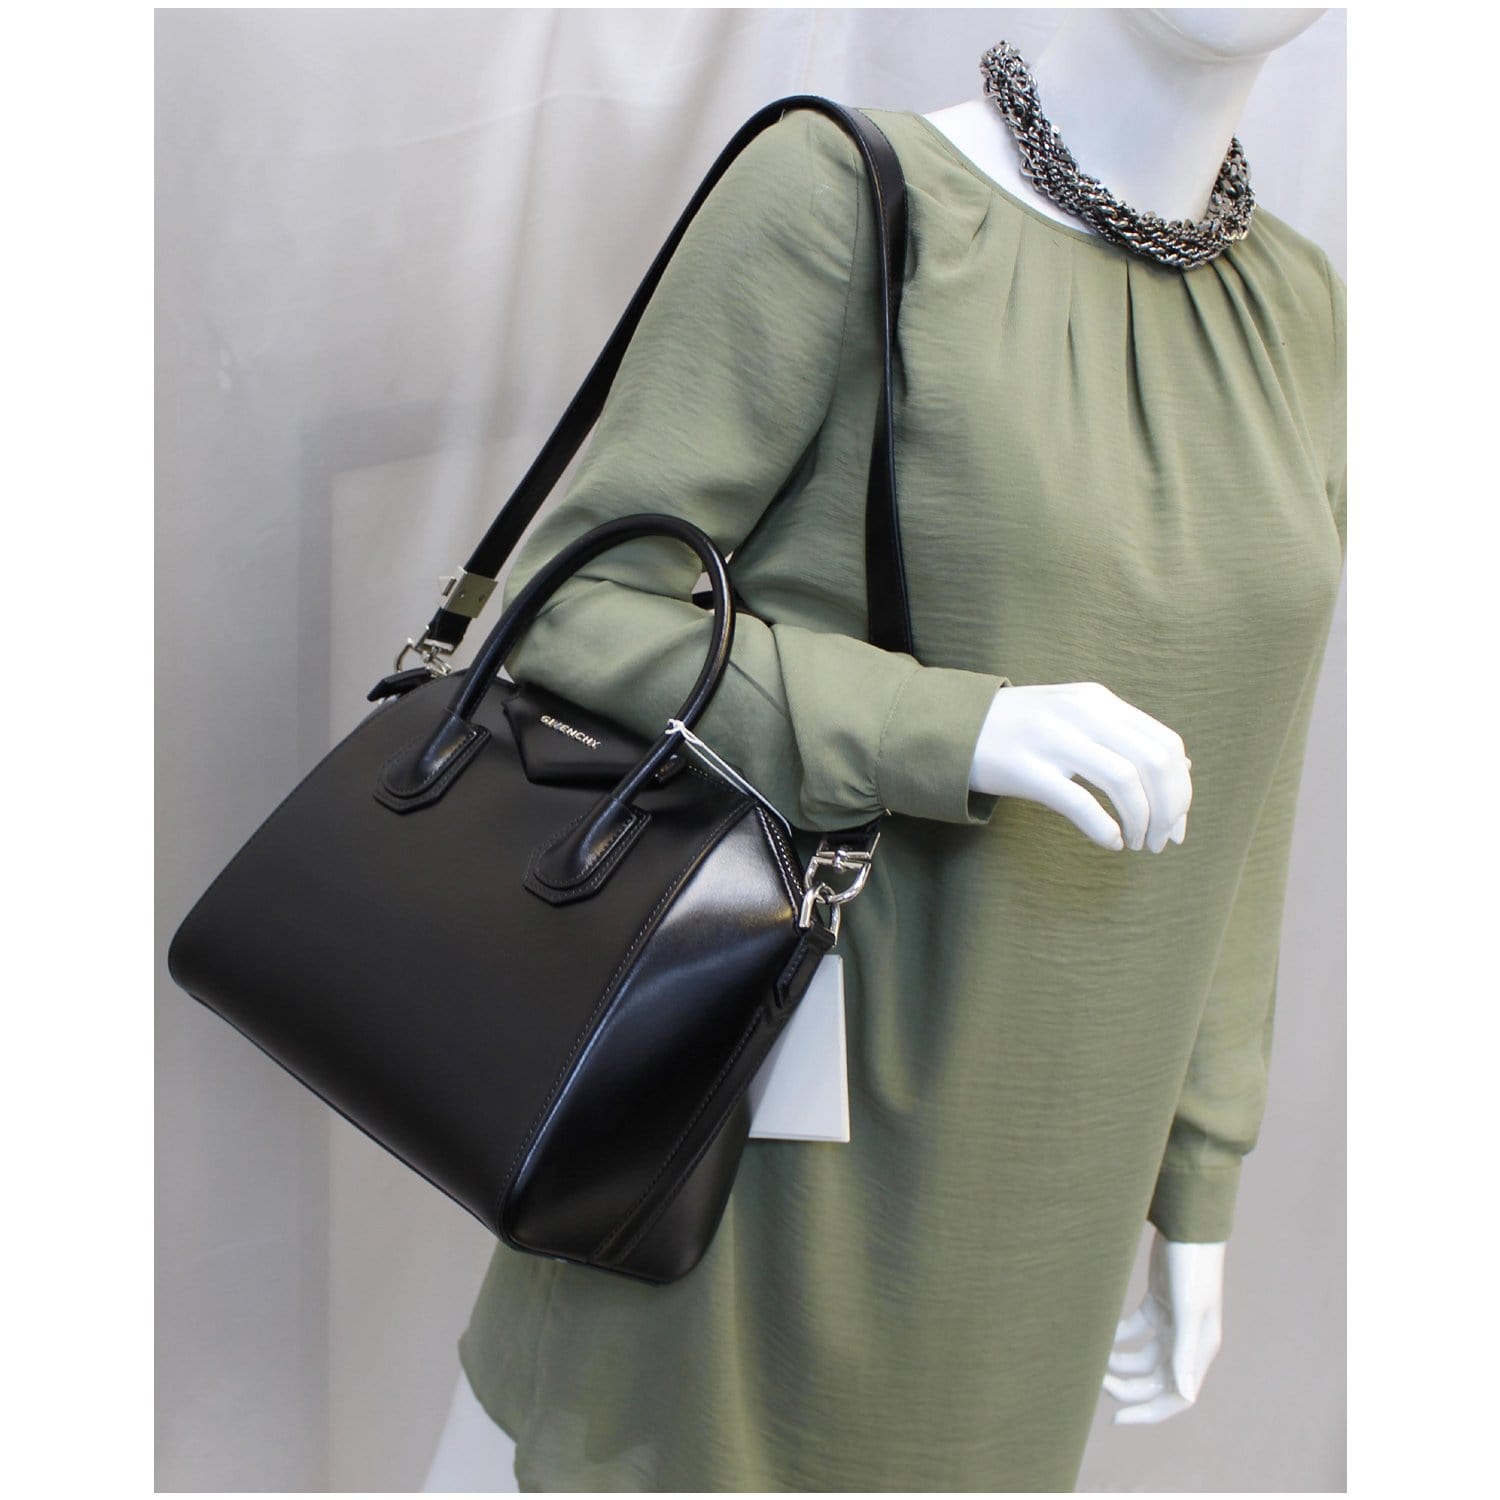 Givenchy Leather Antigona Bag